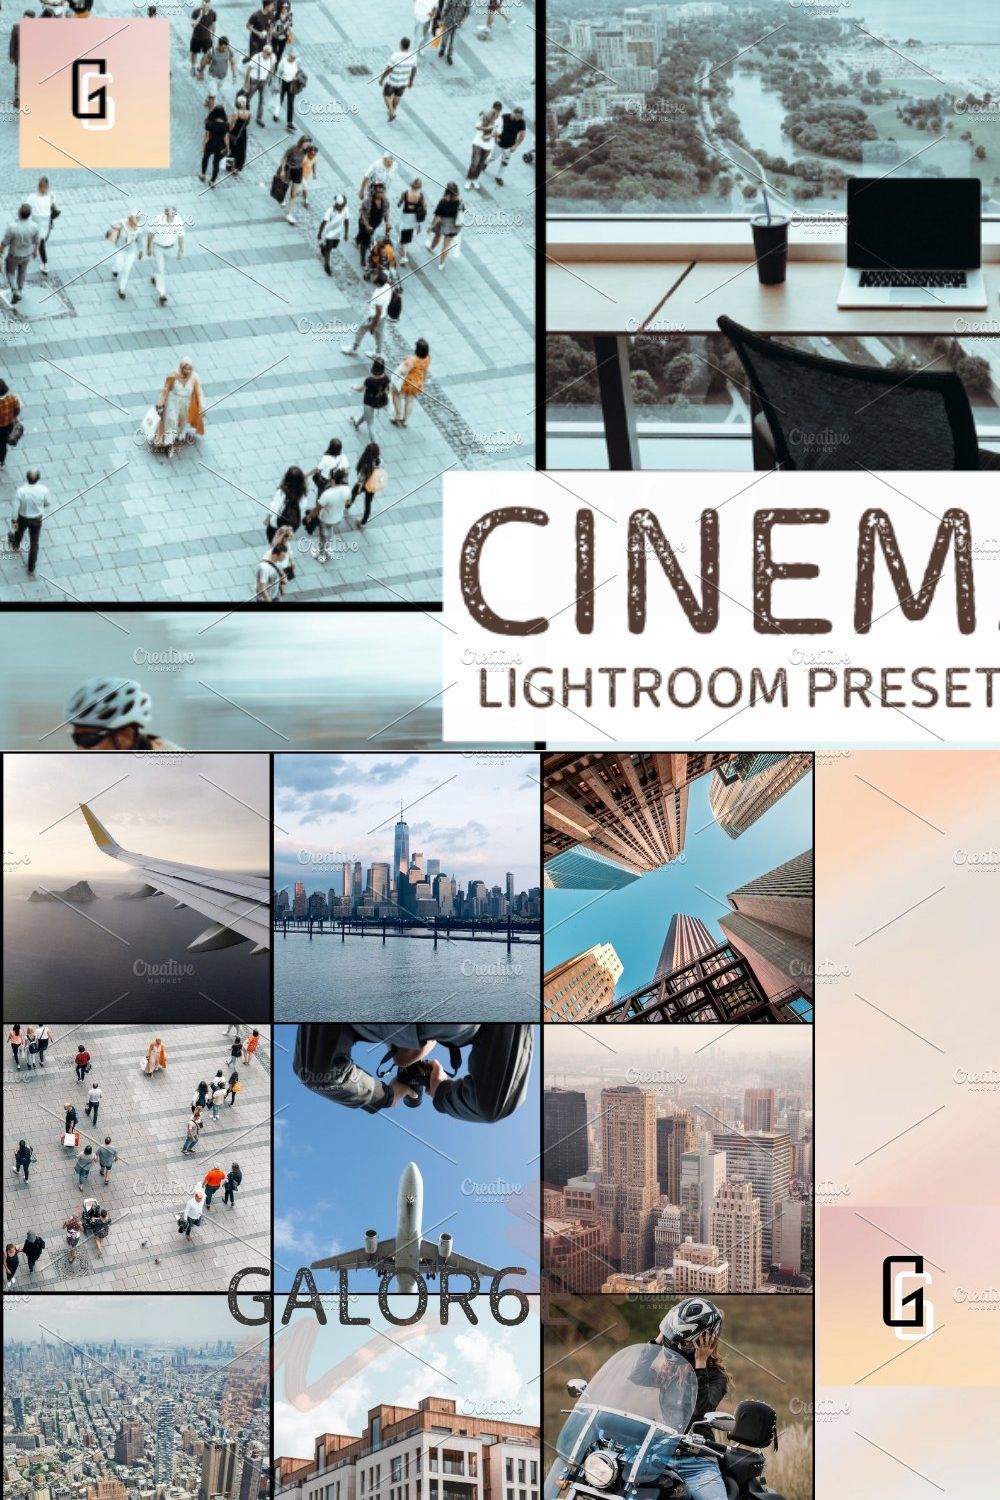 Lightroom Preset CINEMATIC - GALOR6E pinterest preview image.